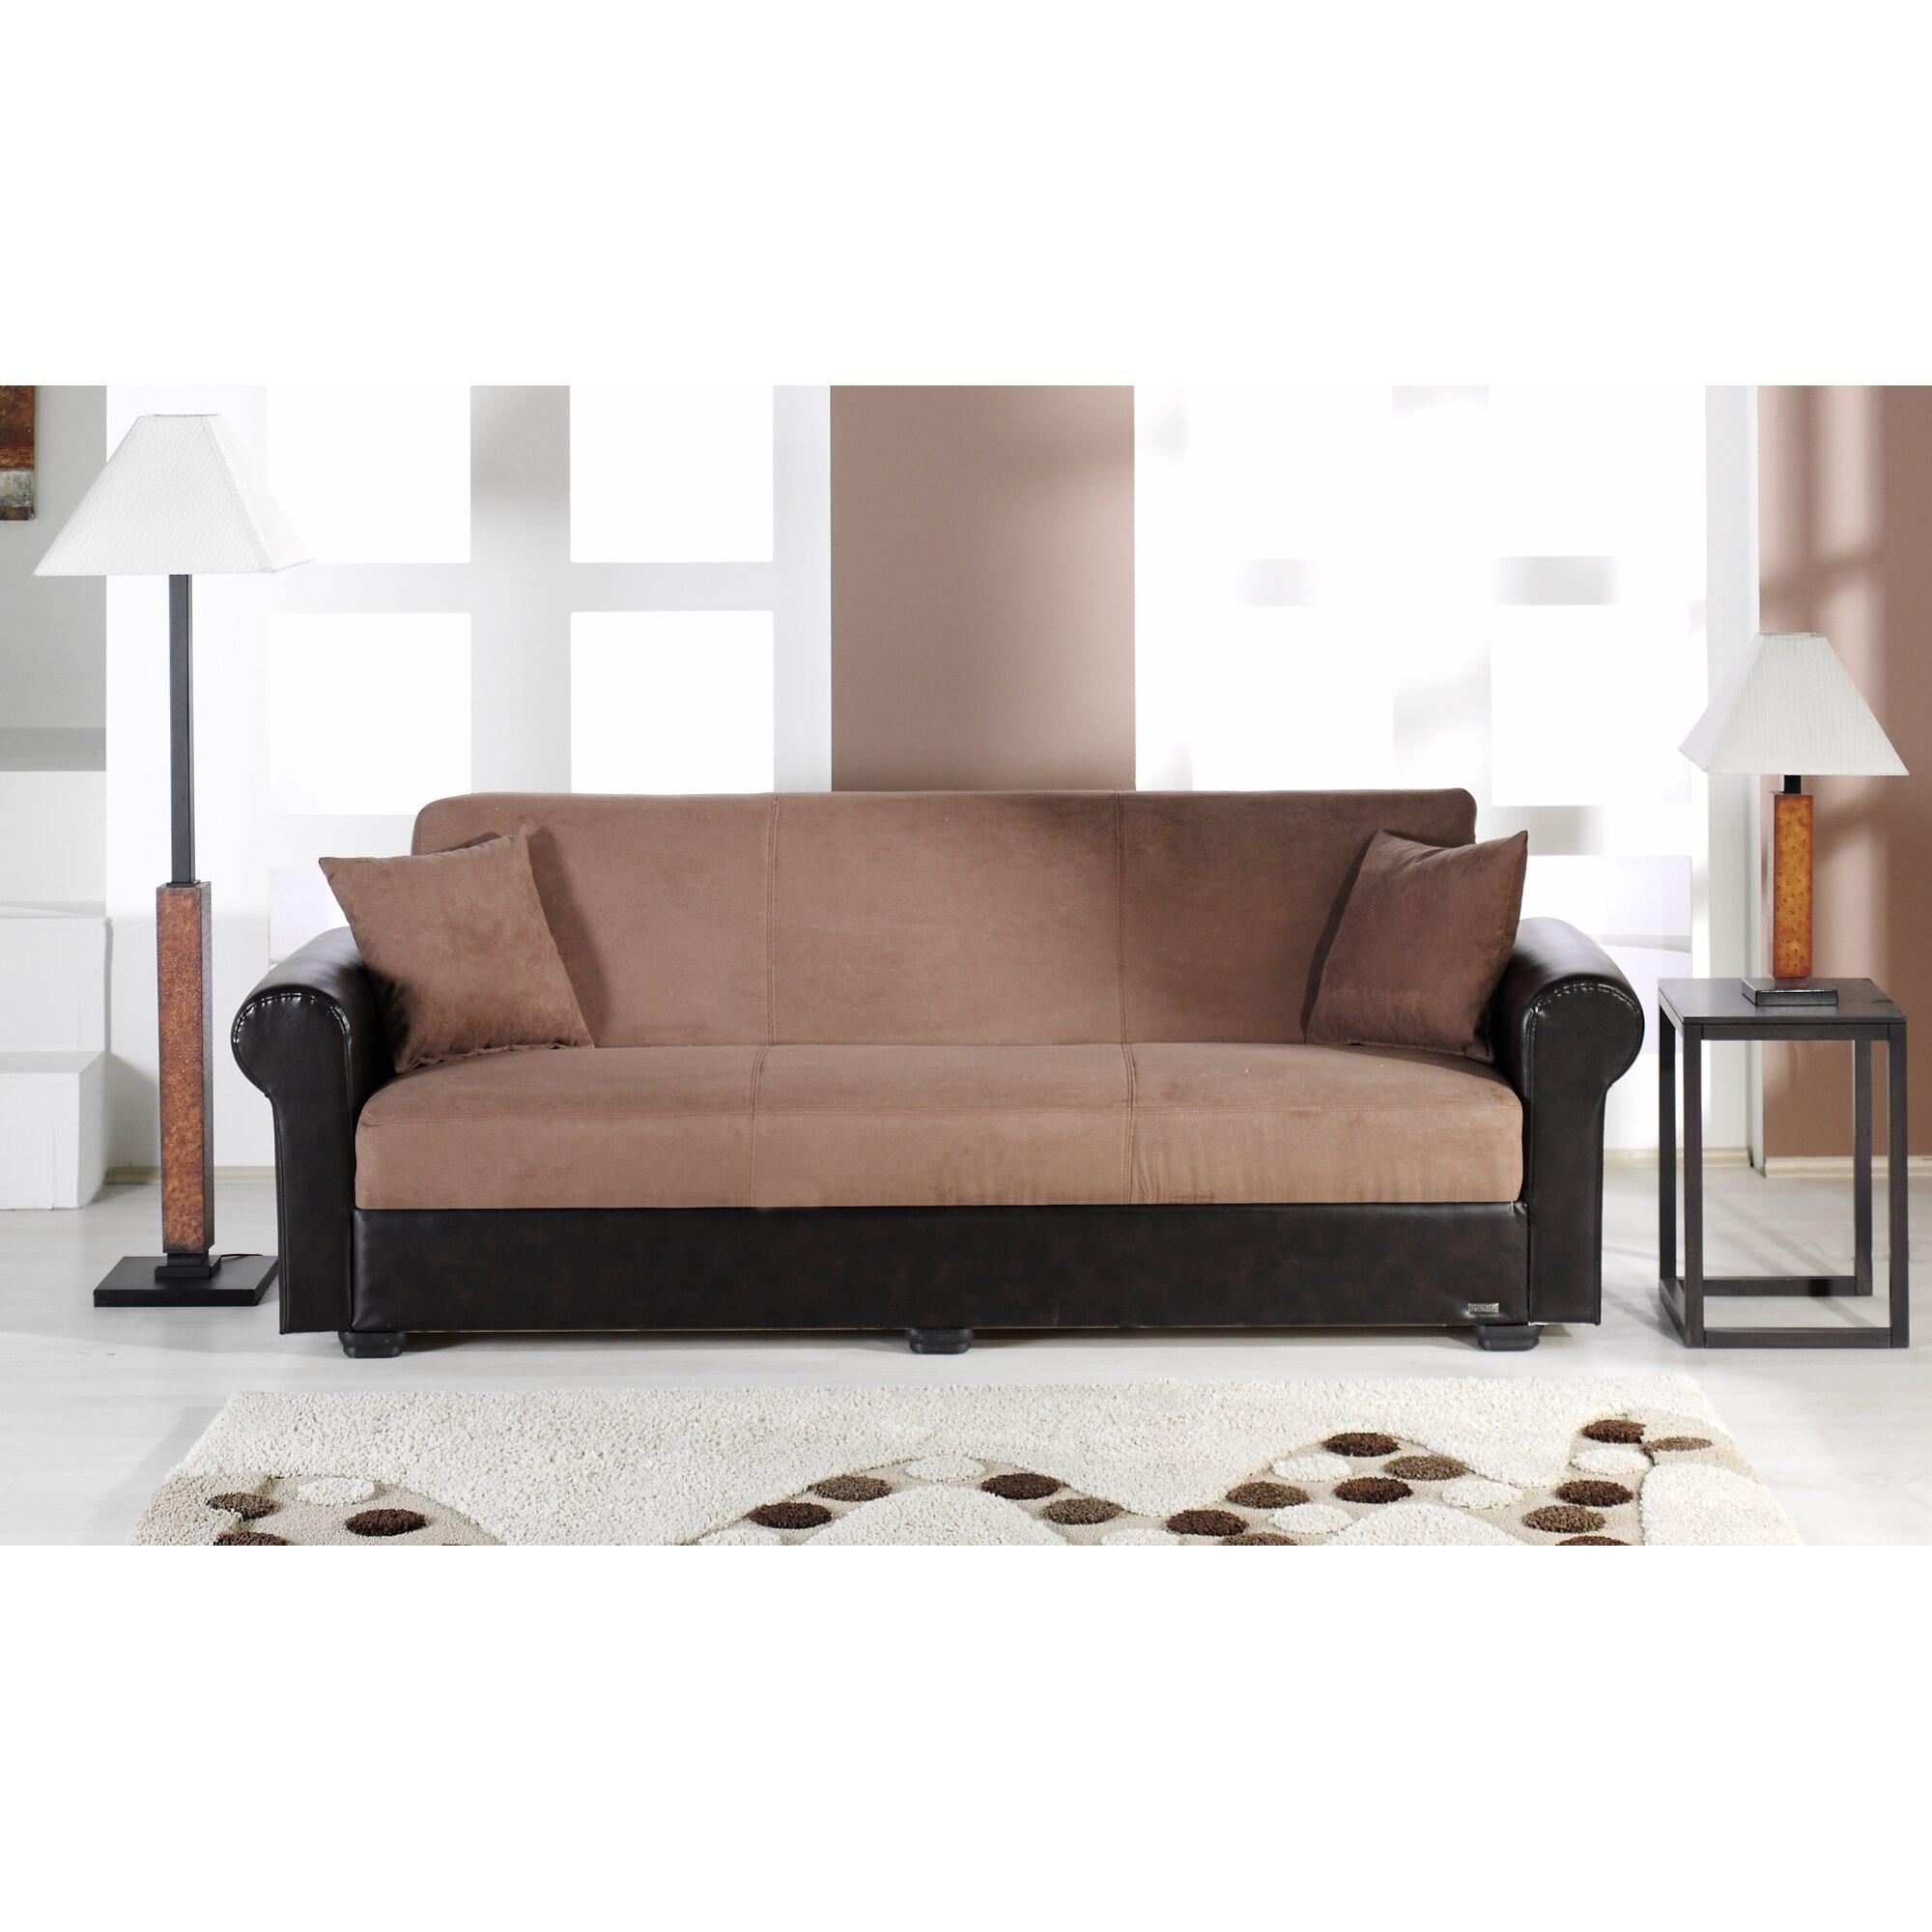 Istikbal Enea Sleeper Sofa & Reviews Wayfair